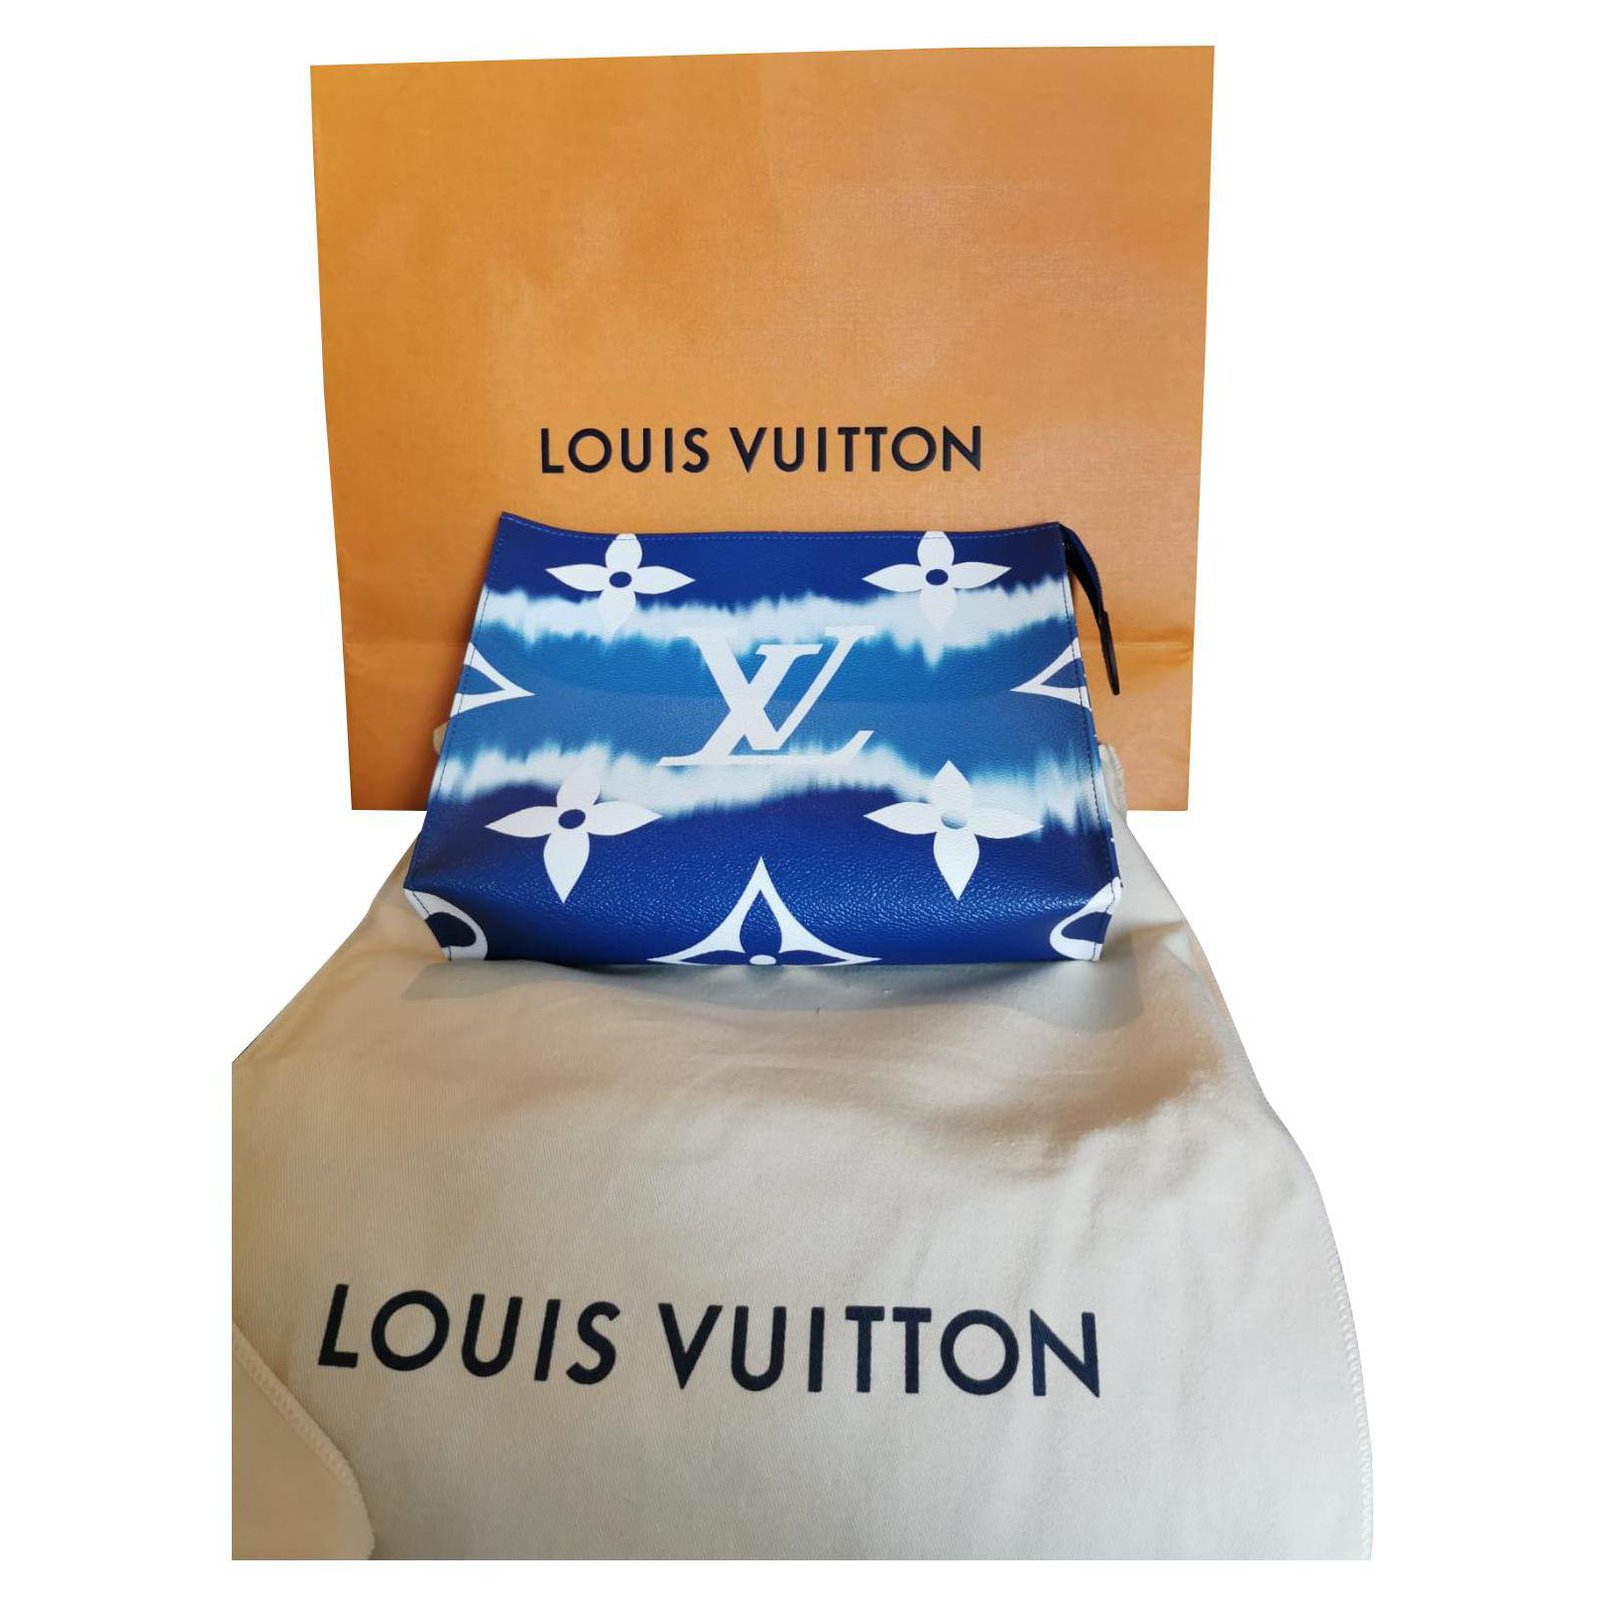 LOUIS VUITTON Monogram Eclipse Pochette Discovery Clutch Bag M62291 w/Box  USED